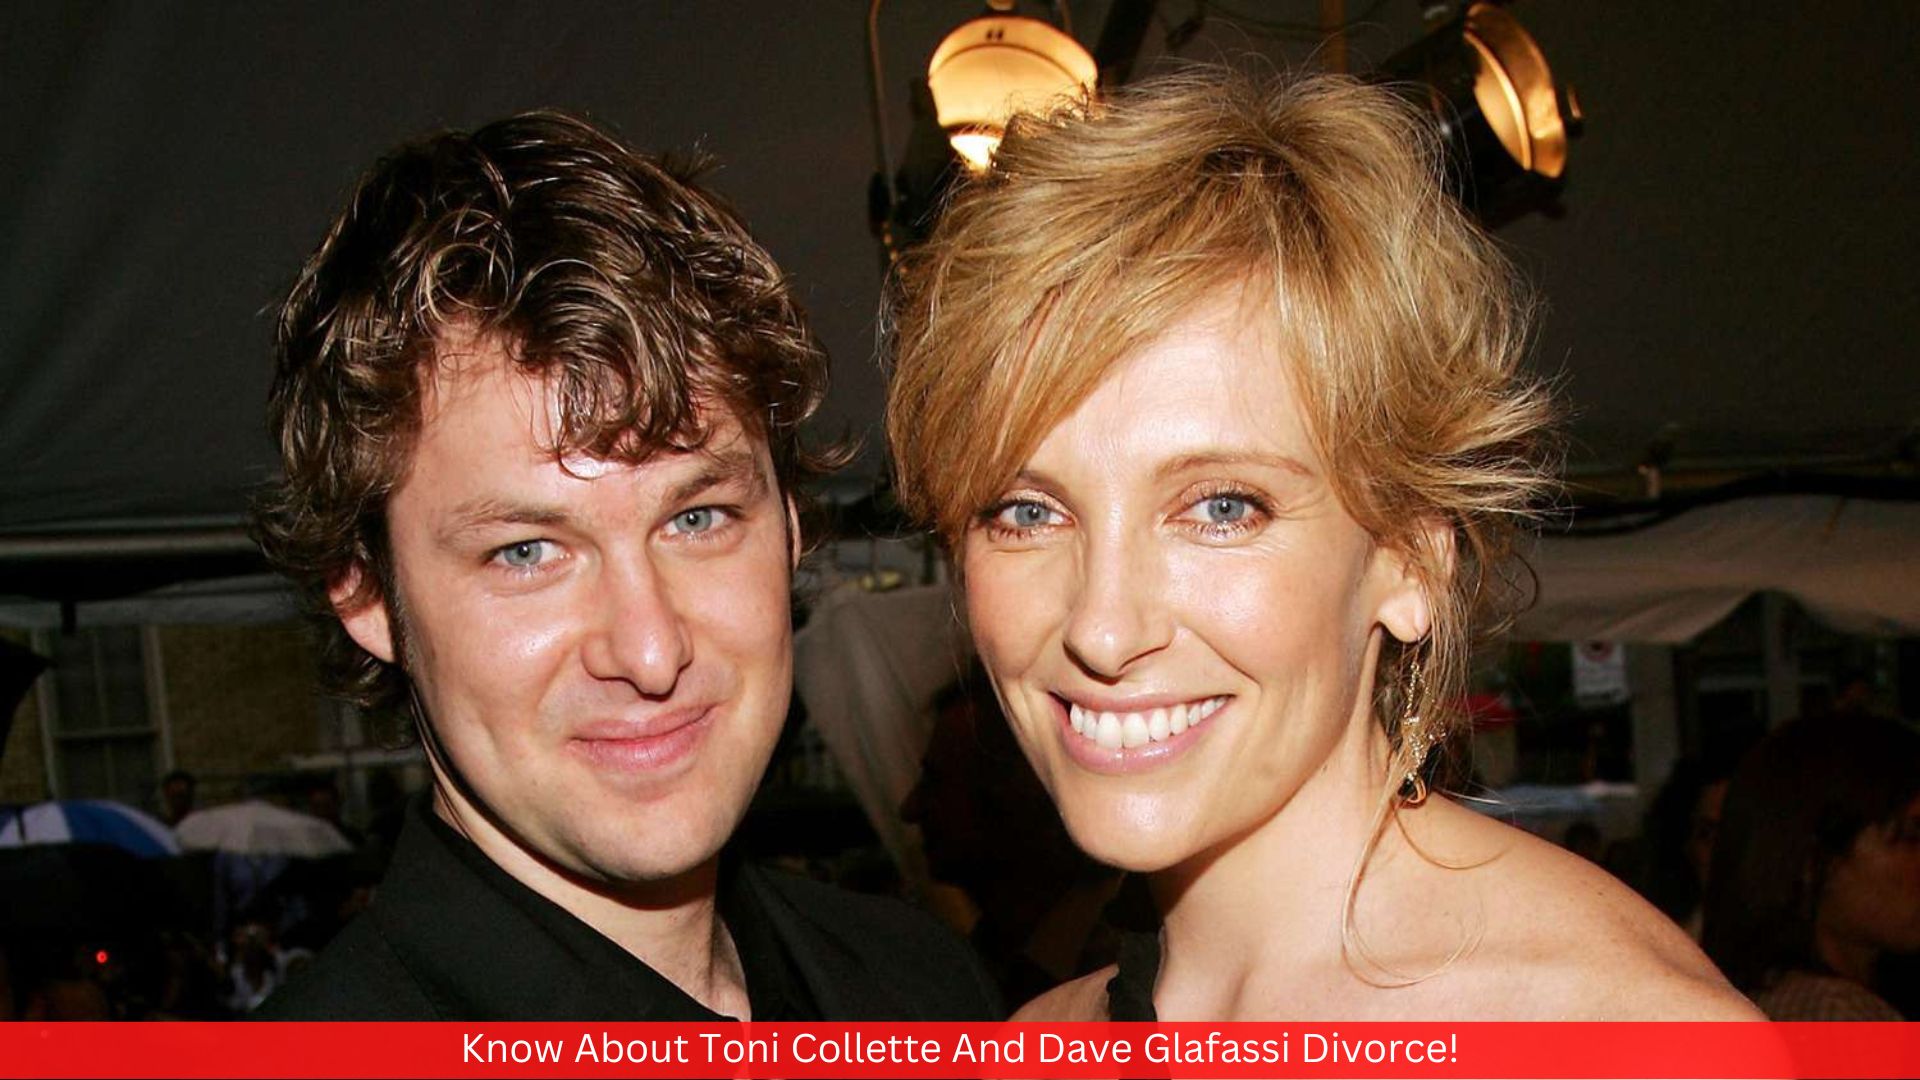 Know About Toni Collette And Dave Glafassi Divorce!